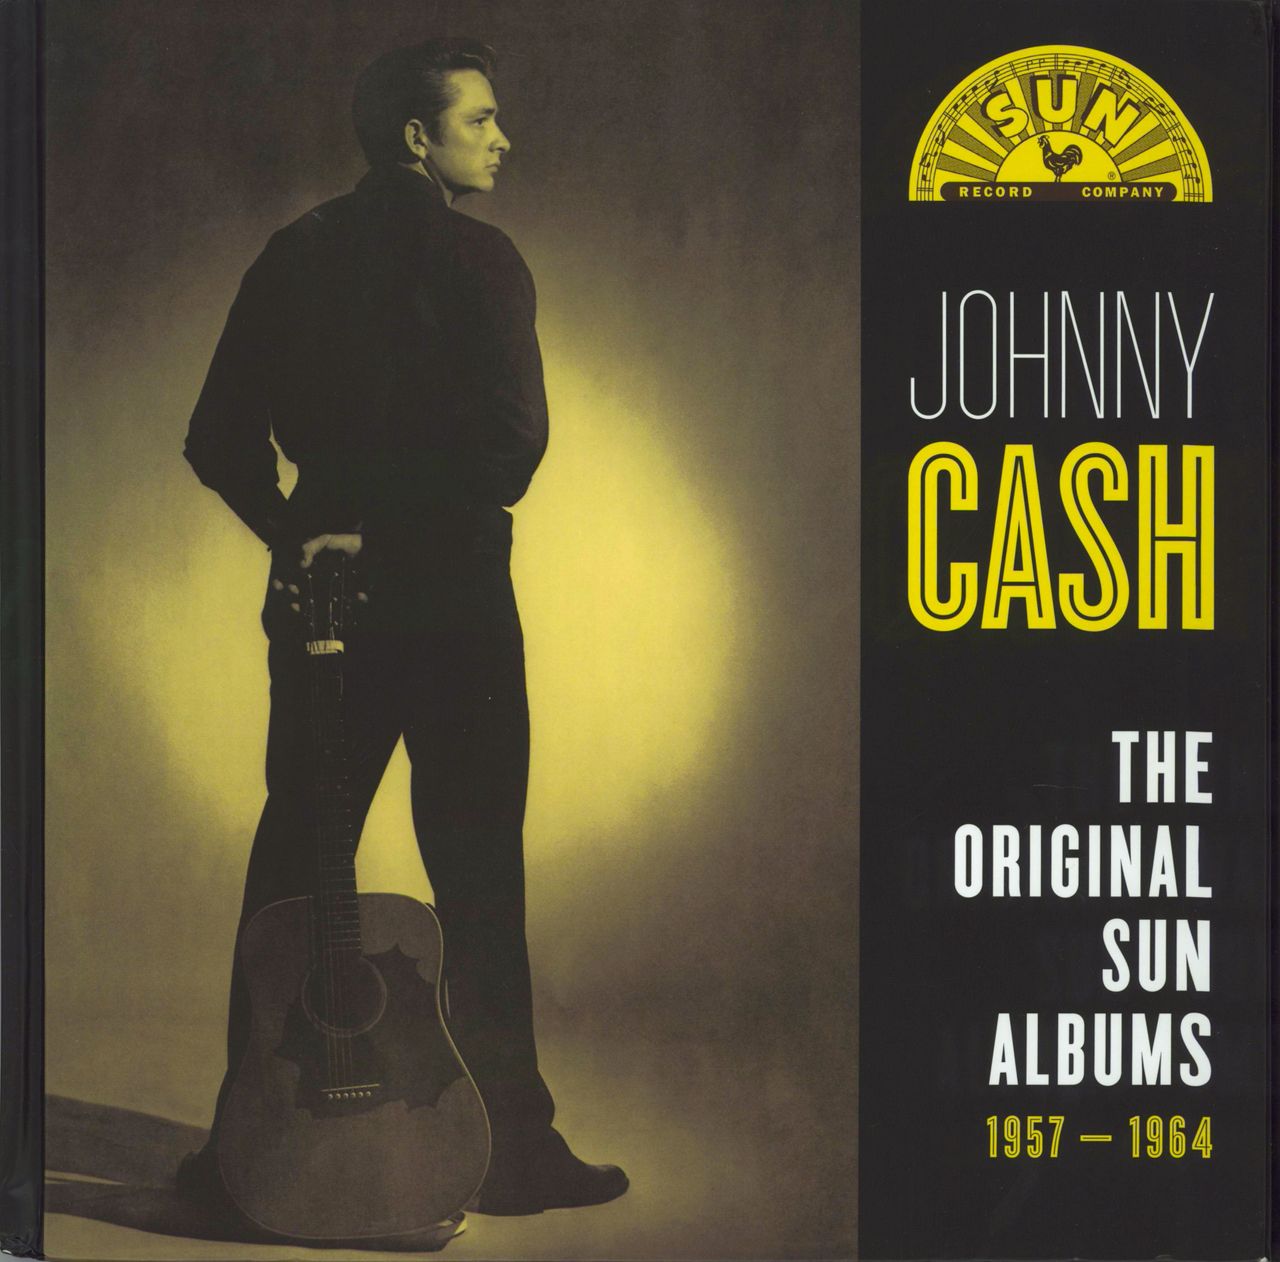 Johnny Cash The Original Sun Albums 1957 - 1964 UK CD Album Box Set B-916